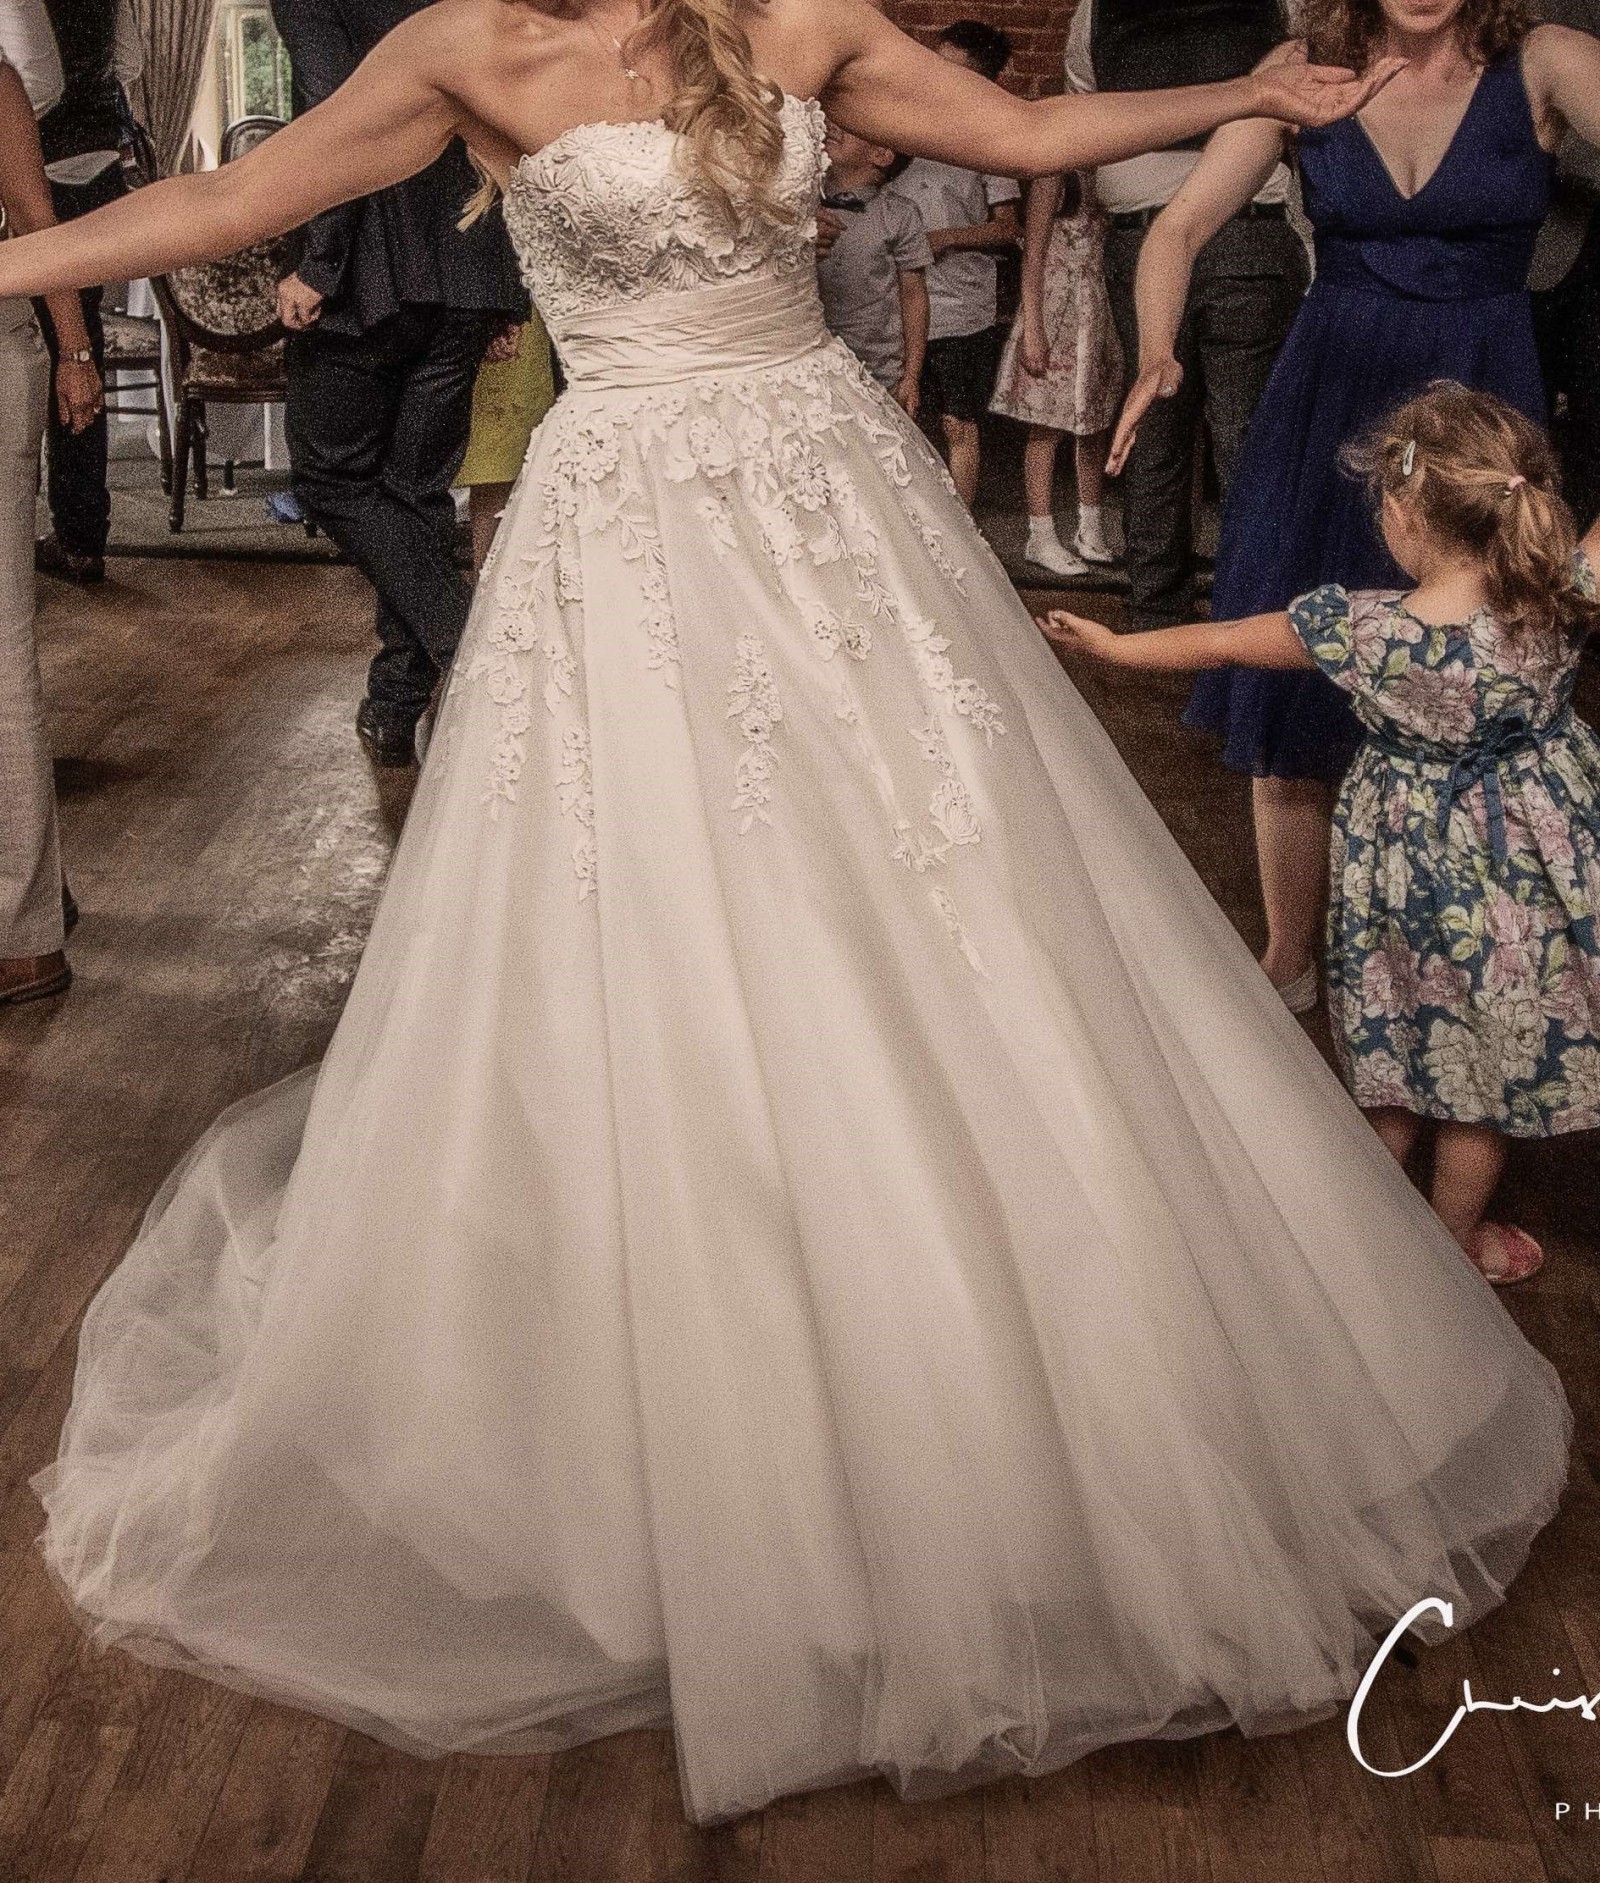  Charlotte  Balbier Formosa Second  Hand  Wedding  Dress  on 